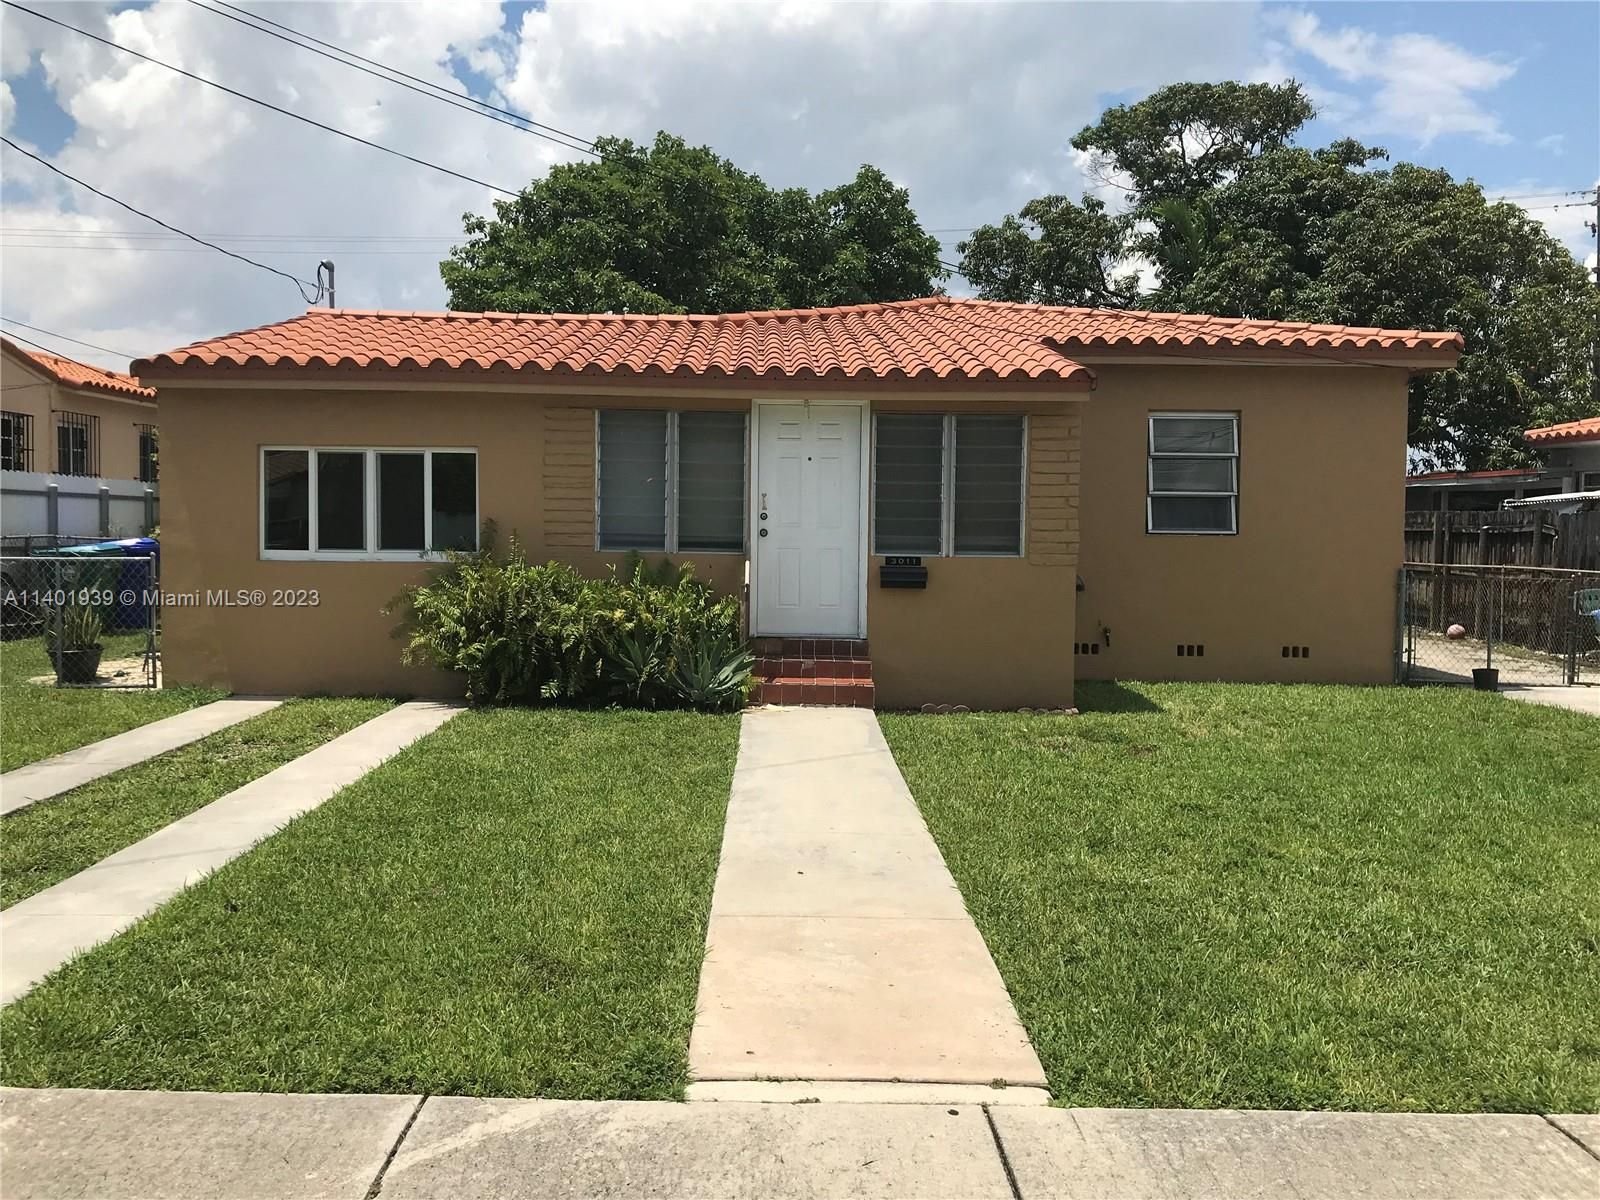 Real estate property located at 3011 6th St, Miami-Dade County, Miami, FL